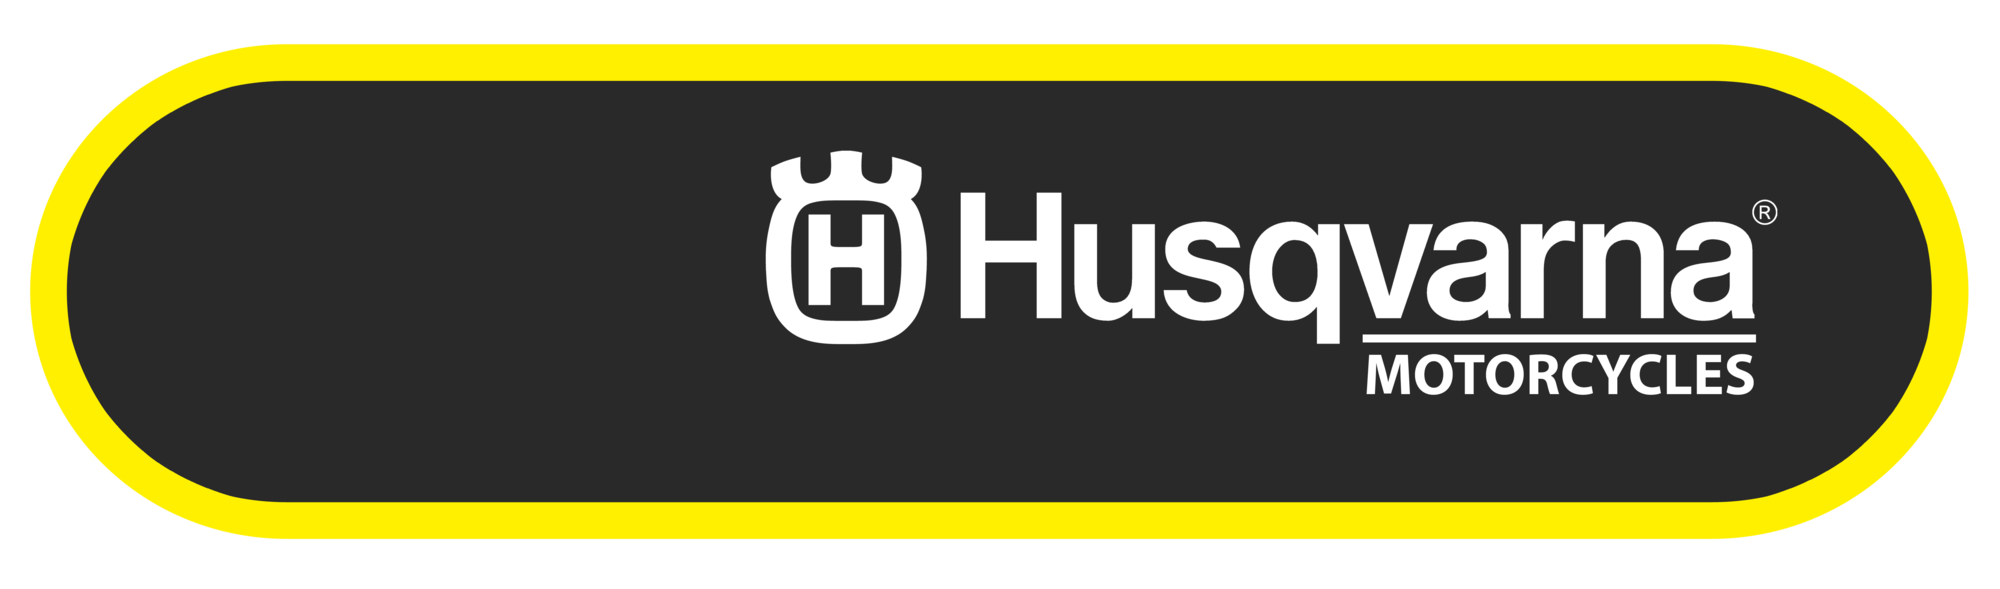 logo-Husqvarna.png